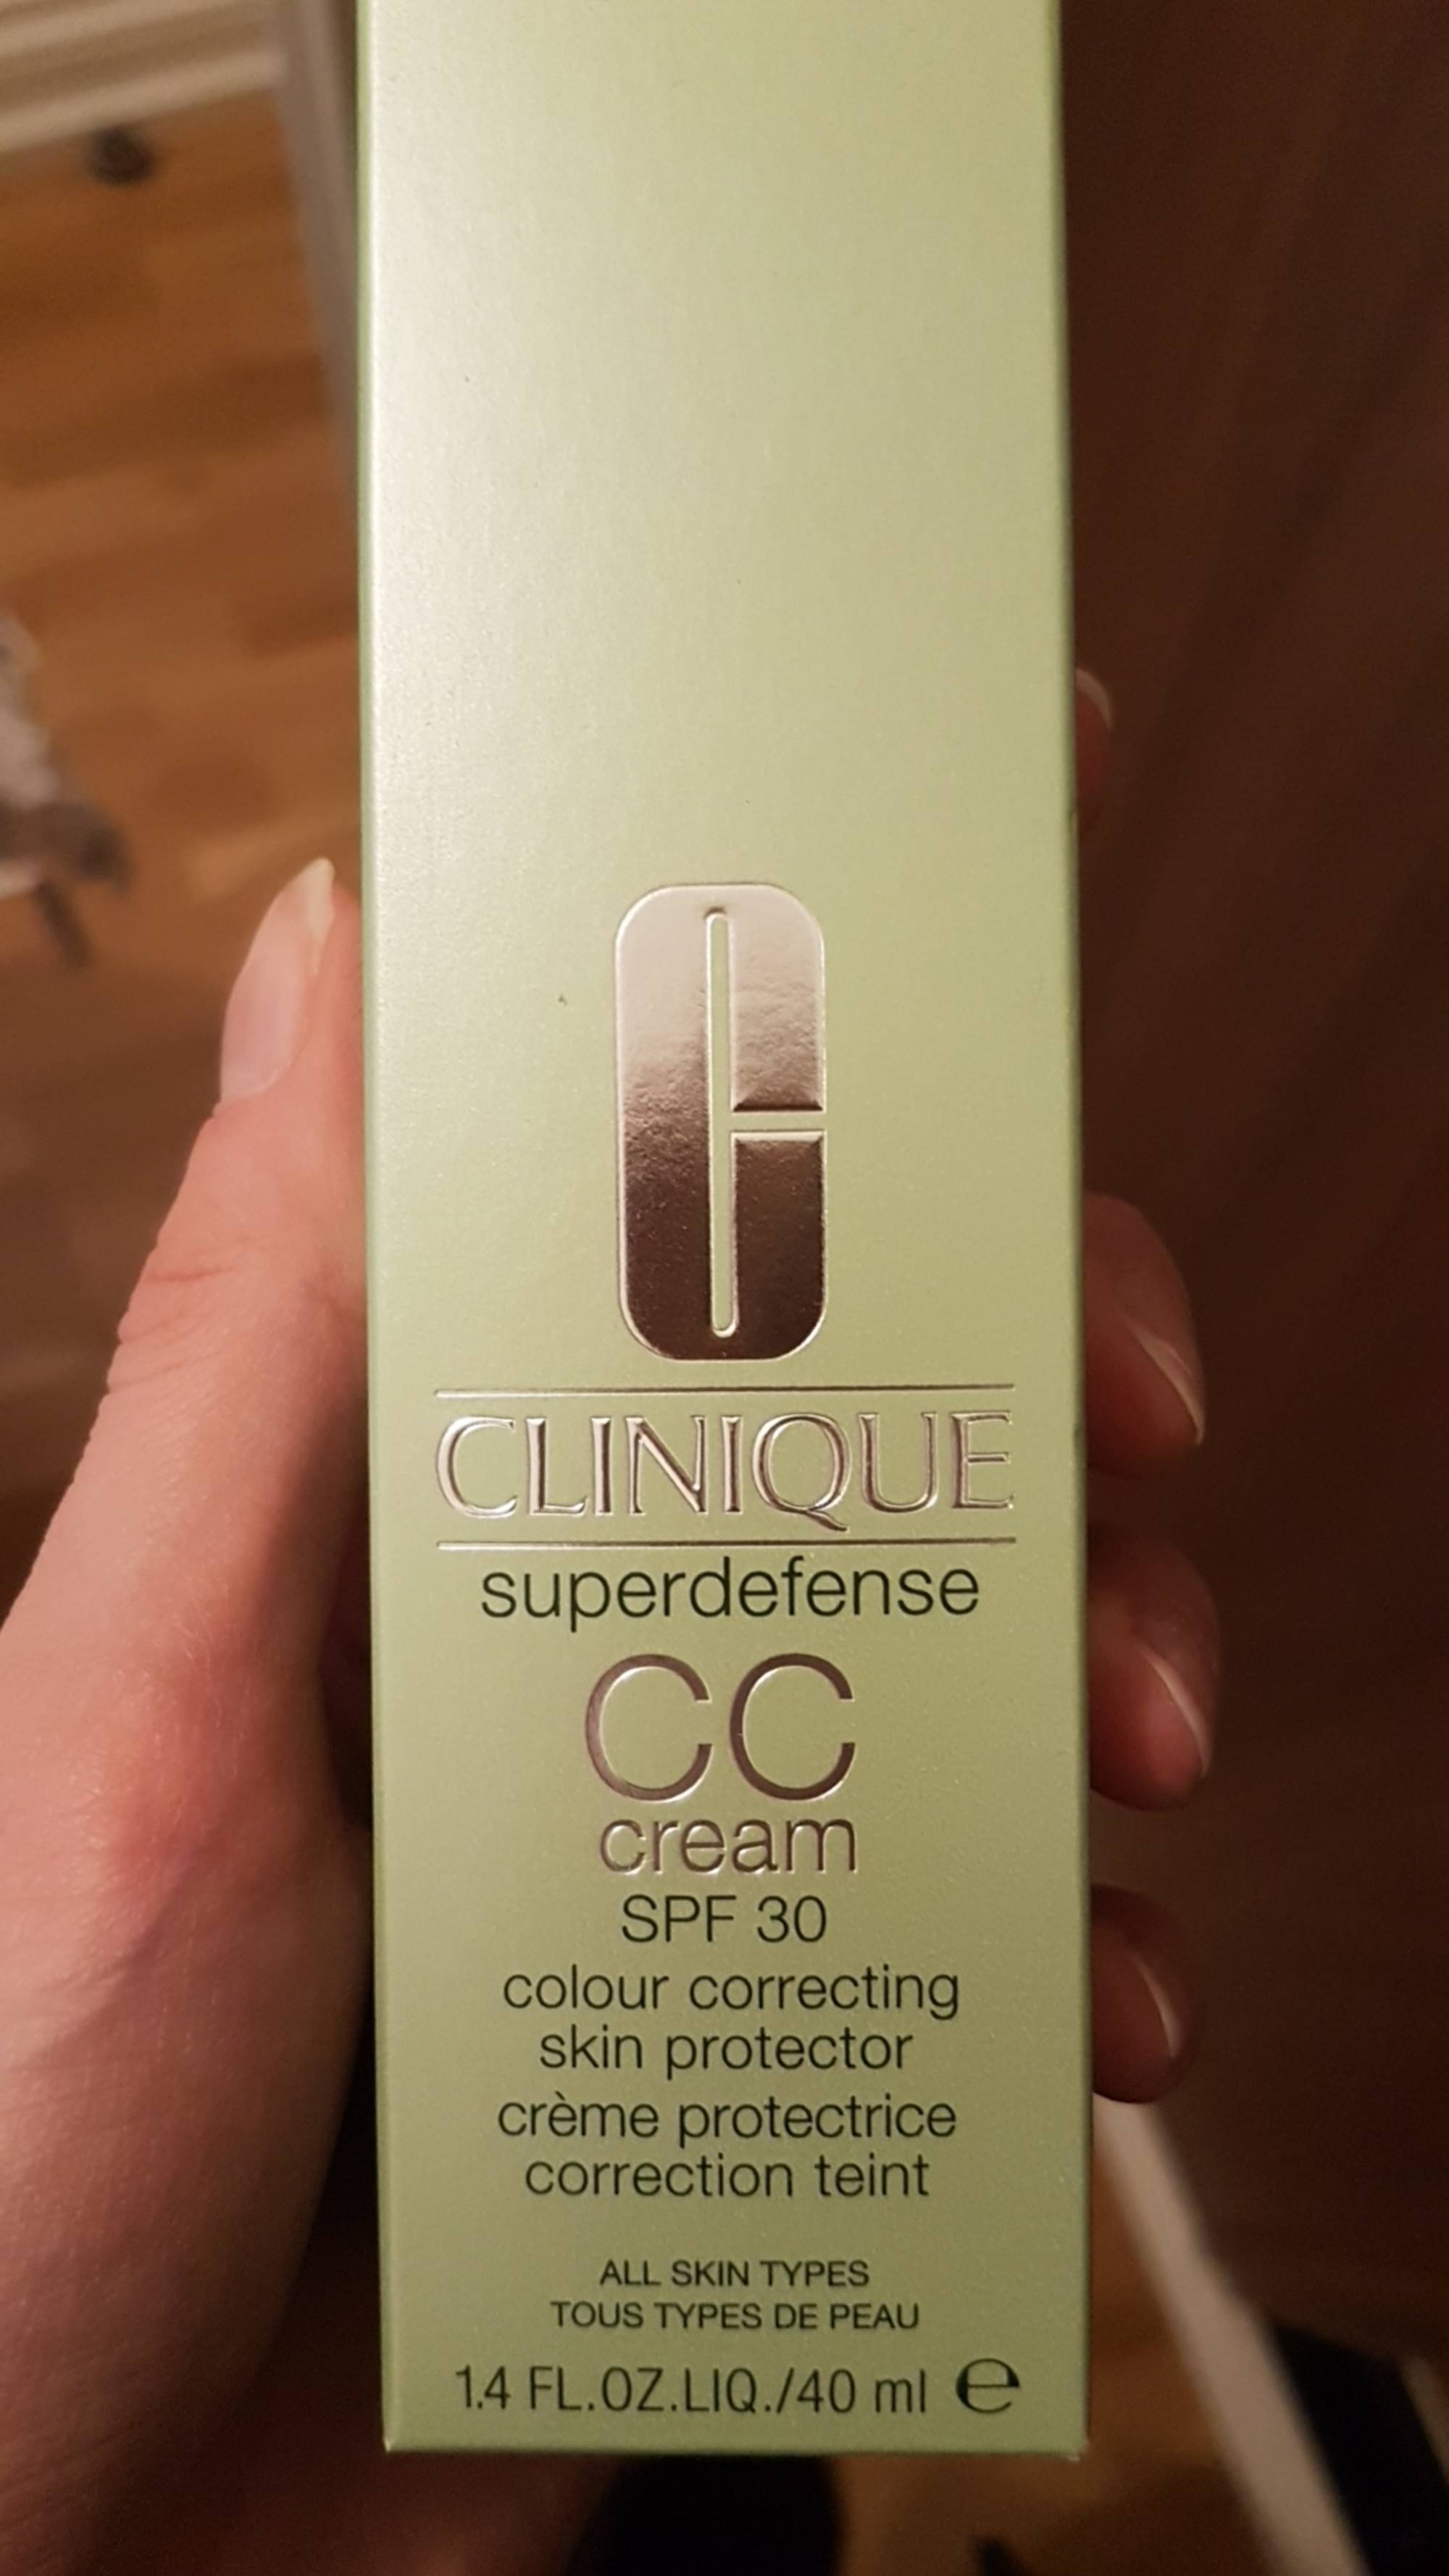 CLINIQUE - CC cream - Crème protectrice correction teint  SPF 30